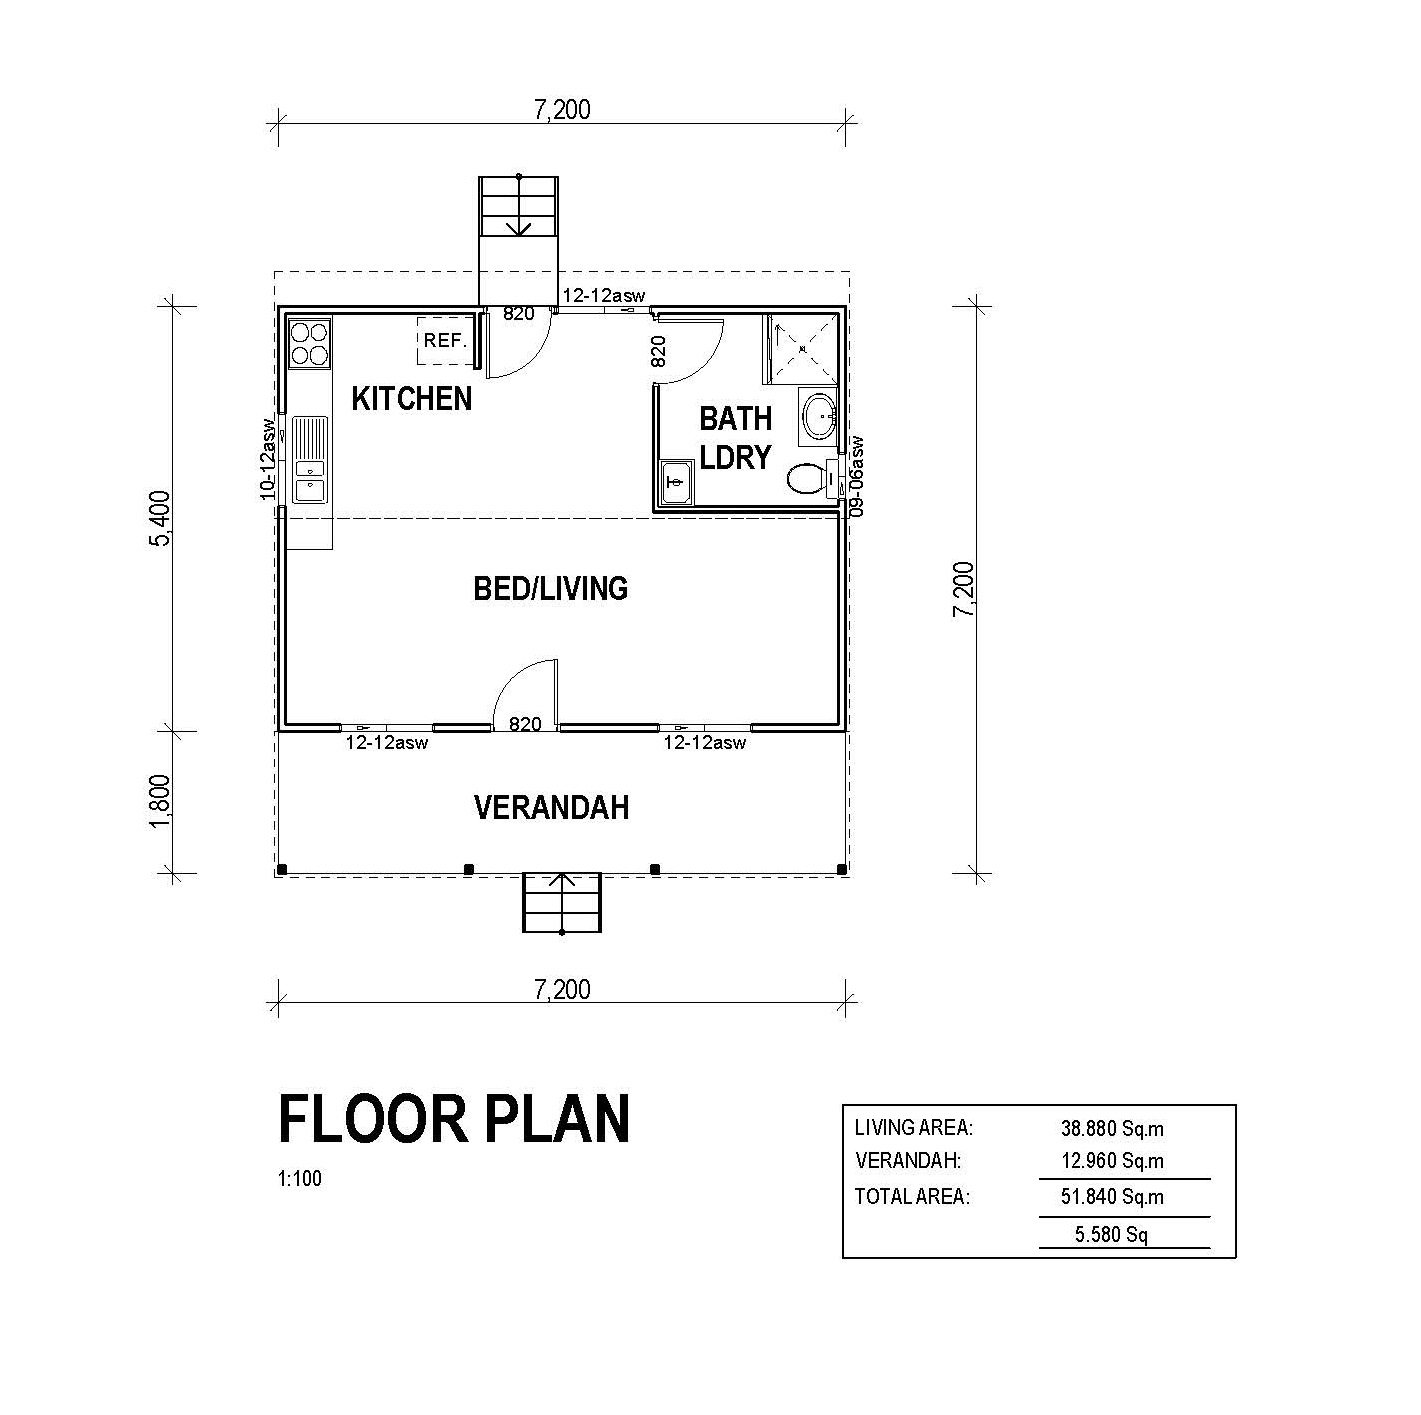 Trinity Floor Plan